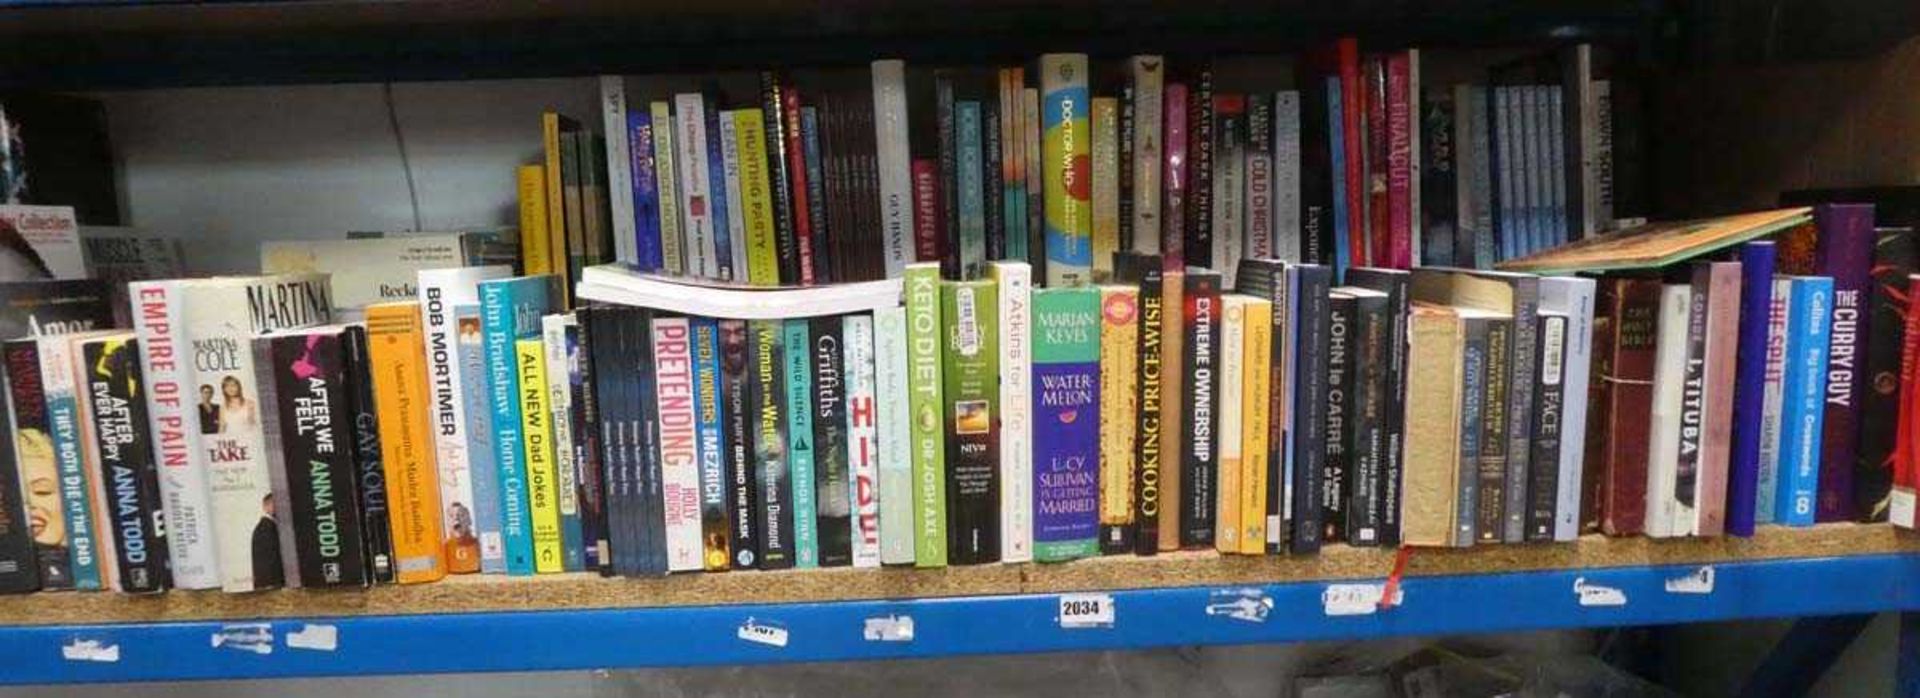 Shelf comprising hard back and paperback novels, autobiographies, etc.